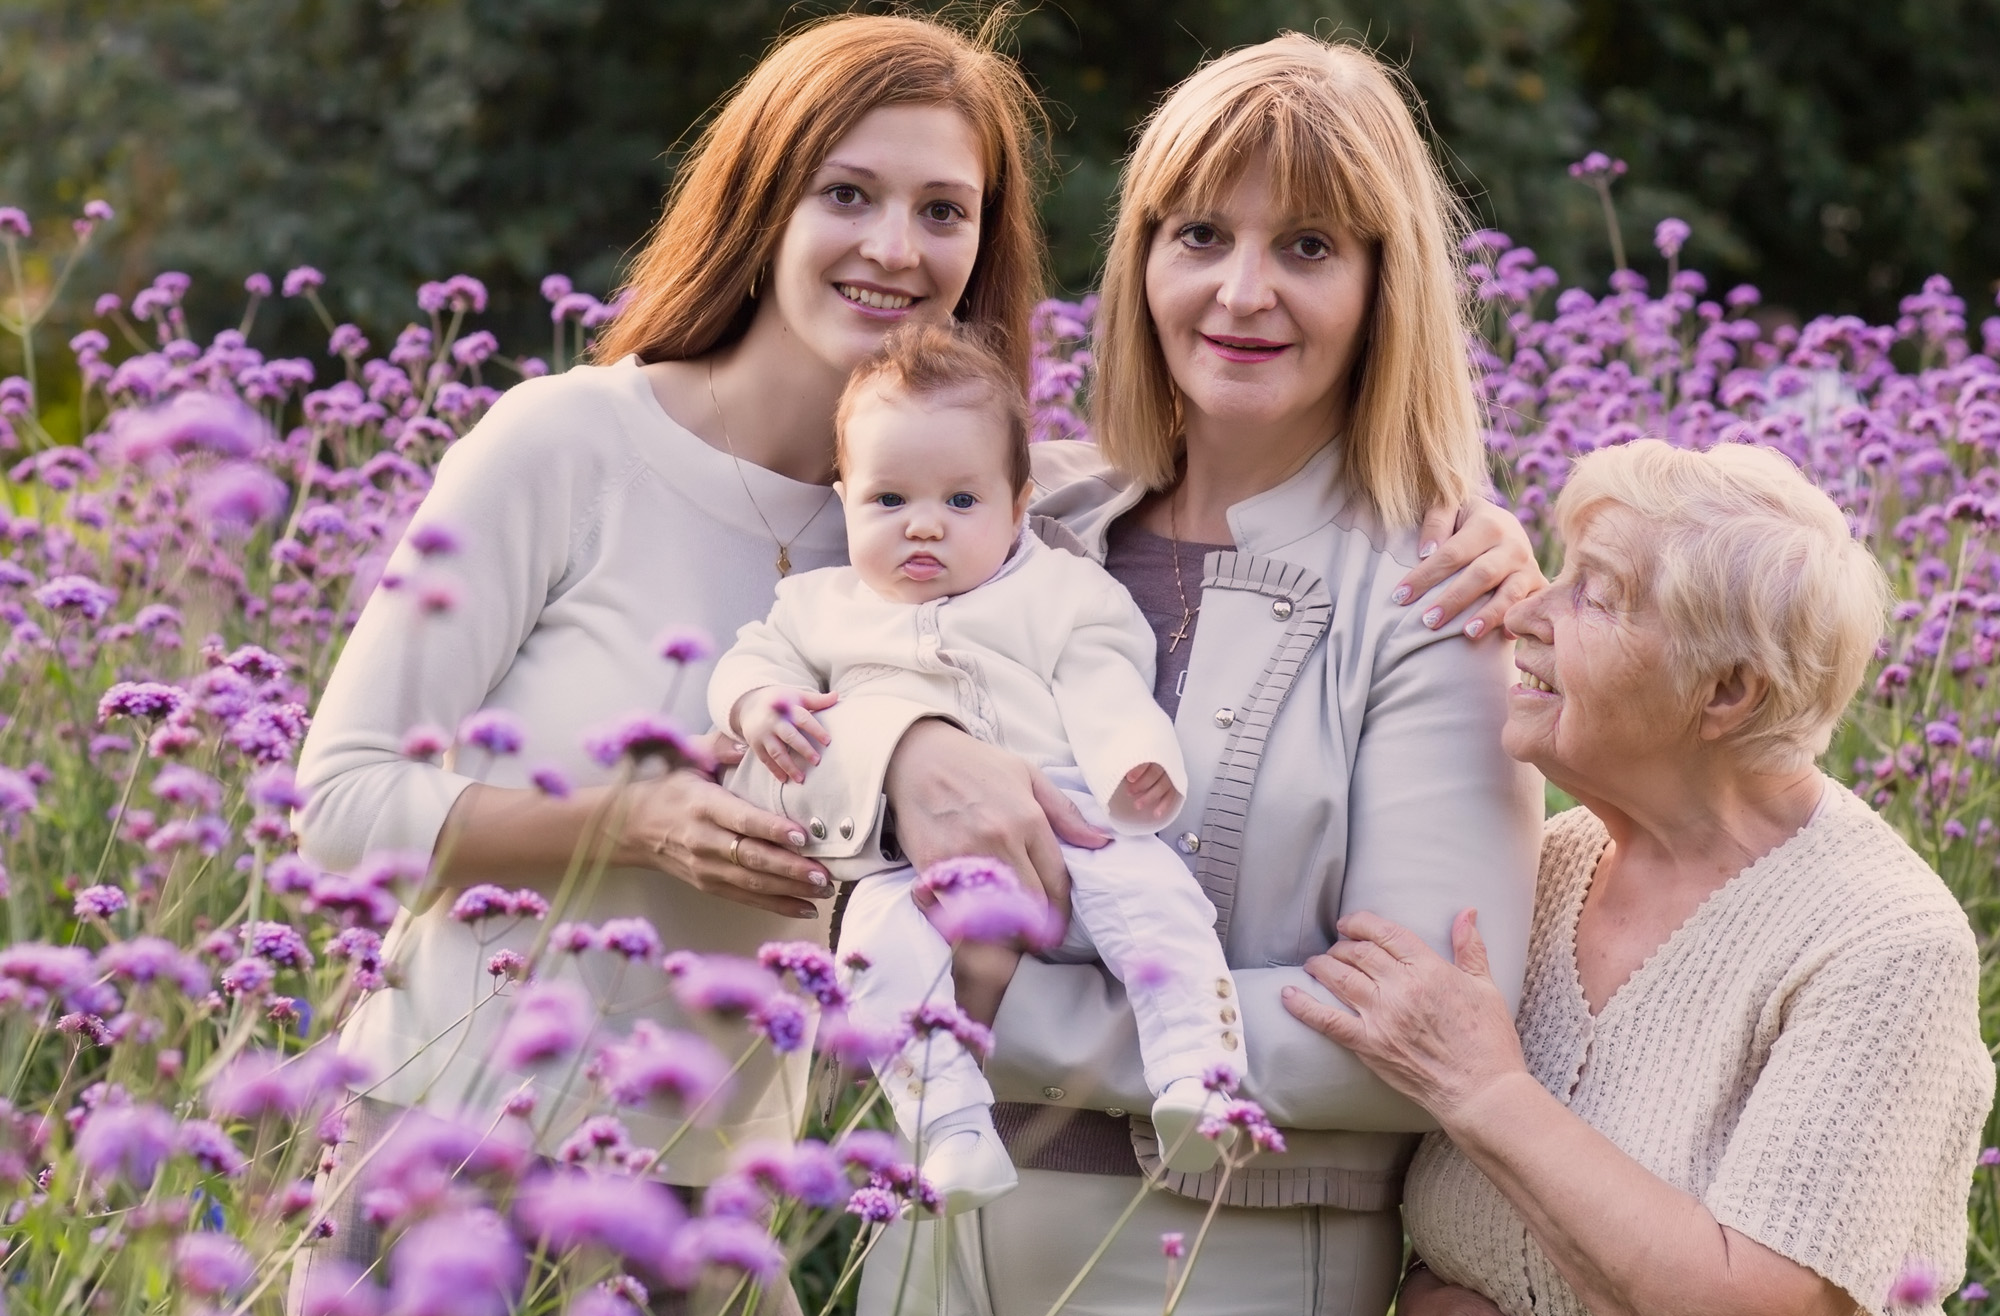 GEMTRA: Transition to Motherhood Across 3 Generations of Women